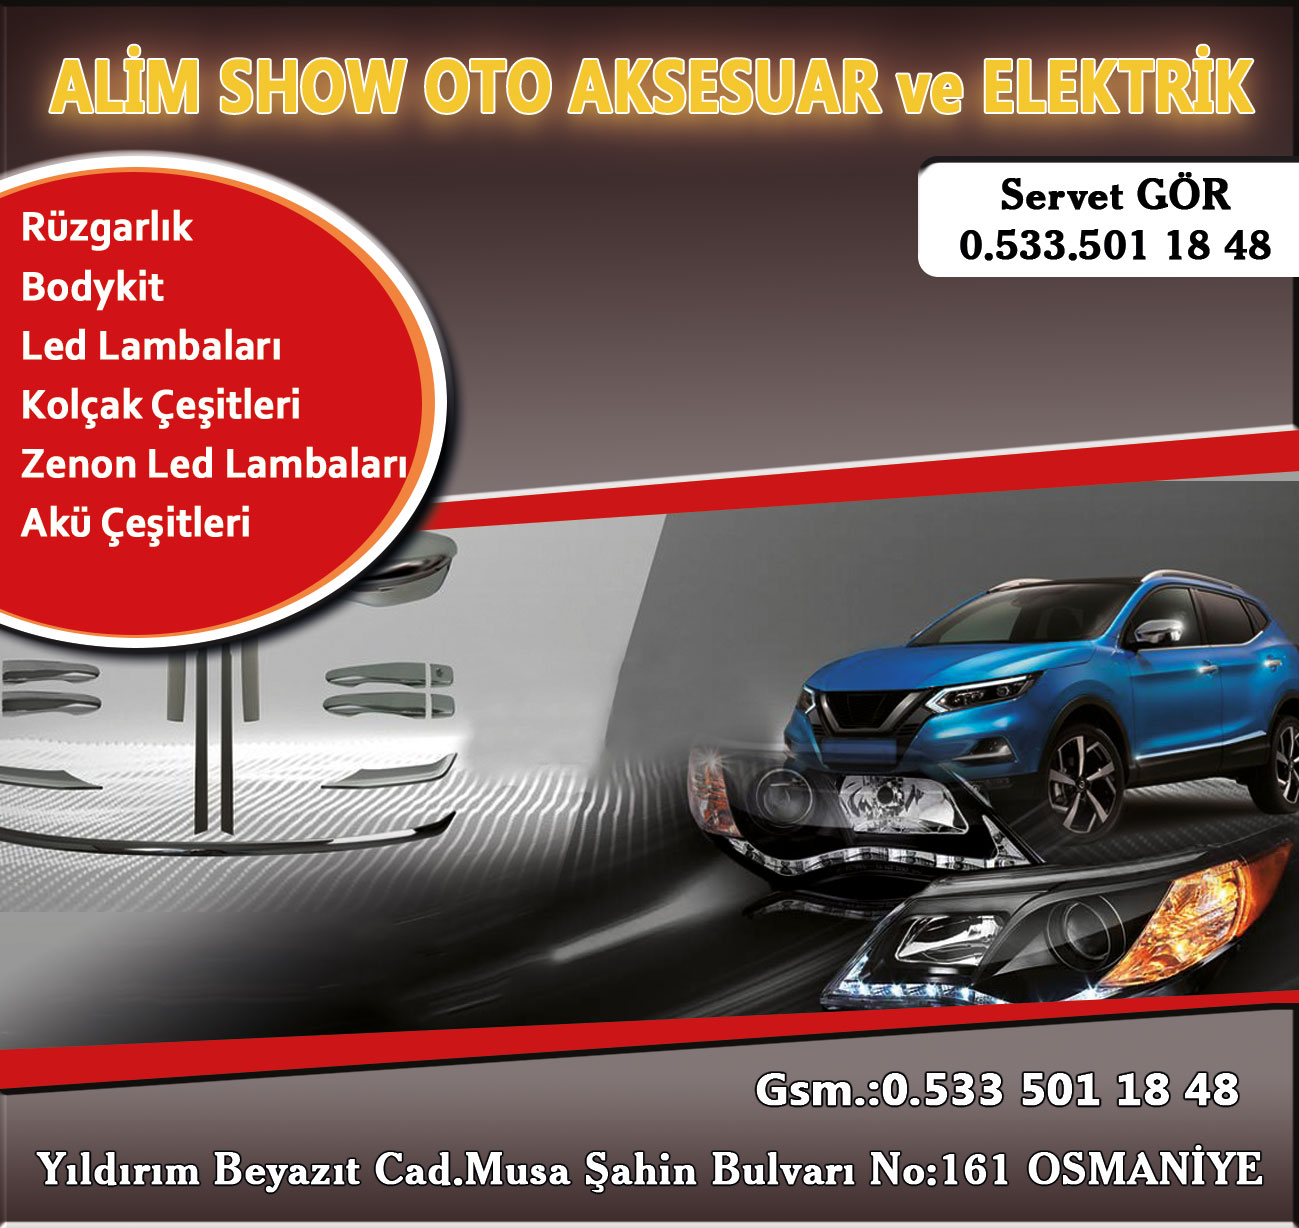 alim-show-oto-aksesuar-ve-elektrik-osmaniye